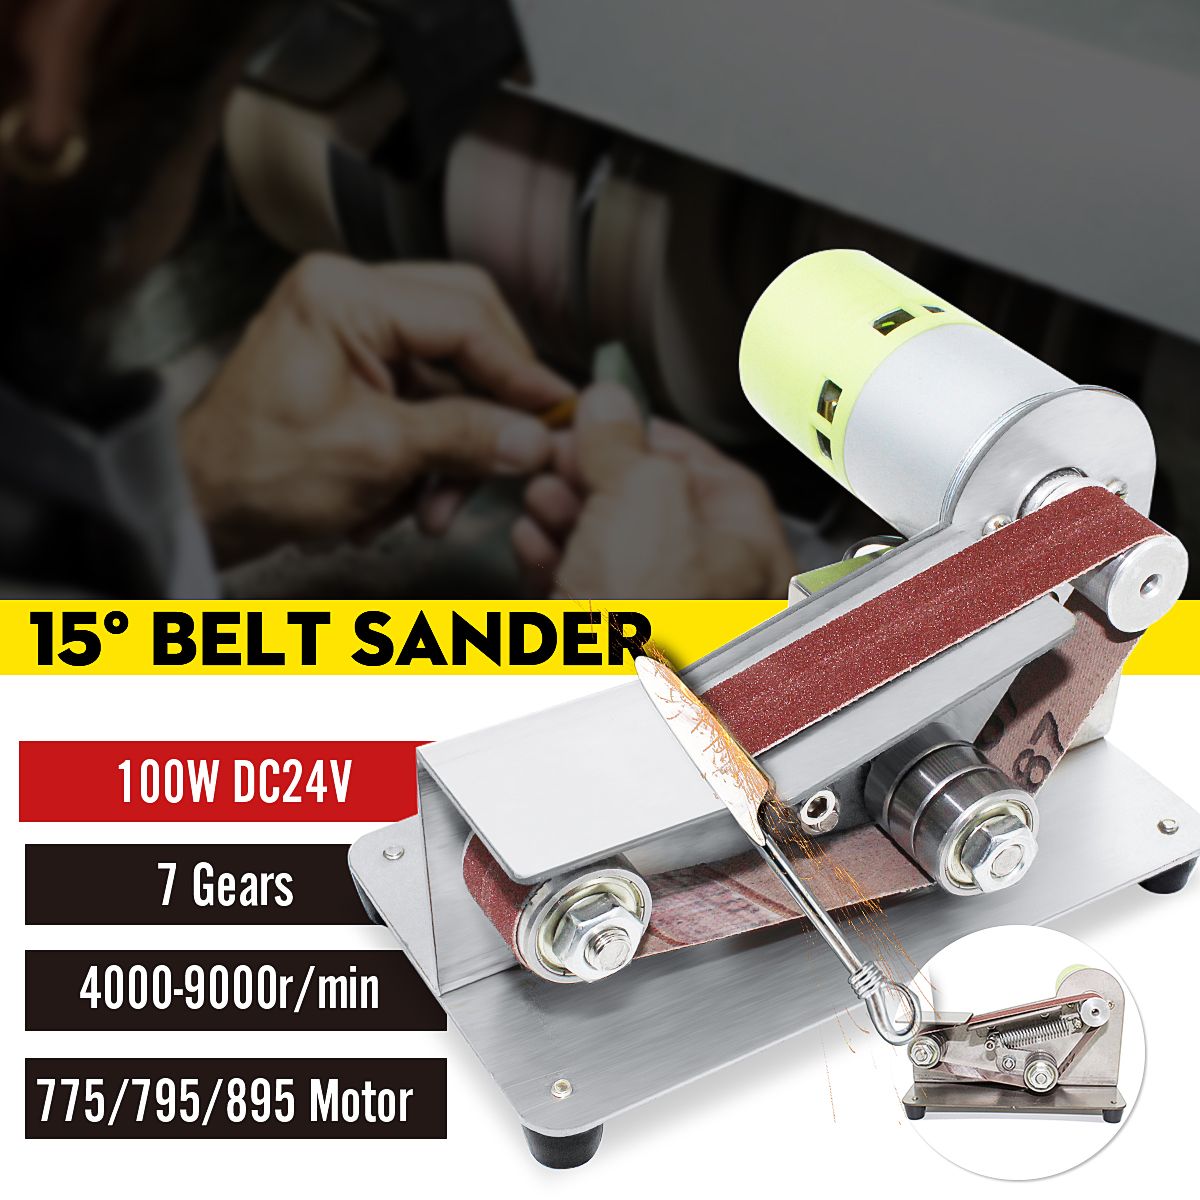 Adjustable-Speed-Belt-Sander-Machine-775795895-Motor-DIY-Grinding-Polishing-Machine-1689624